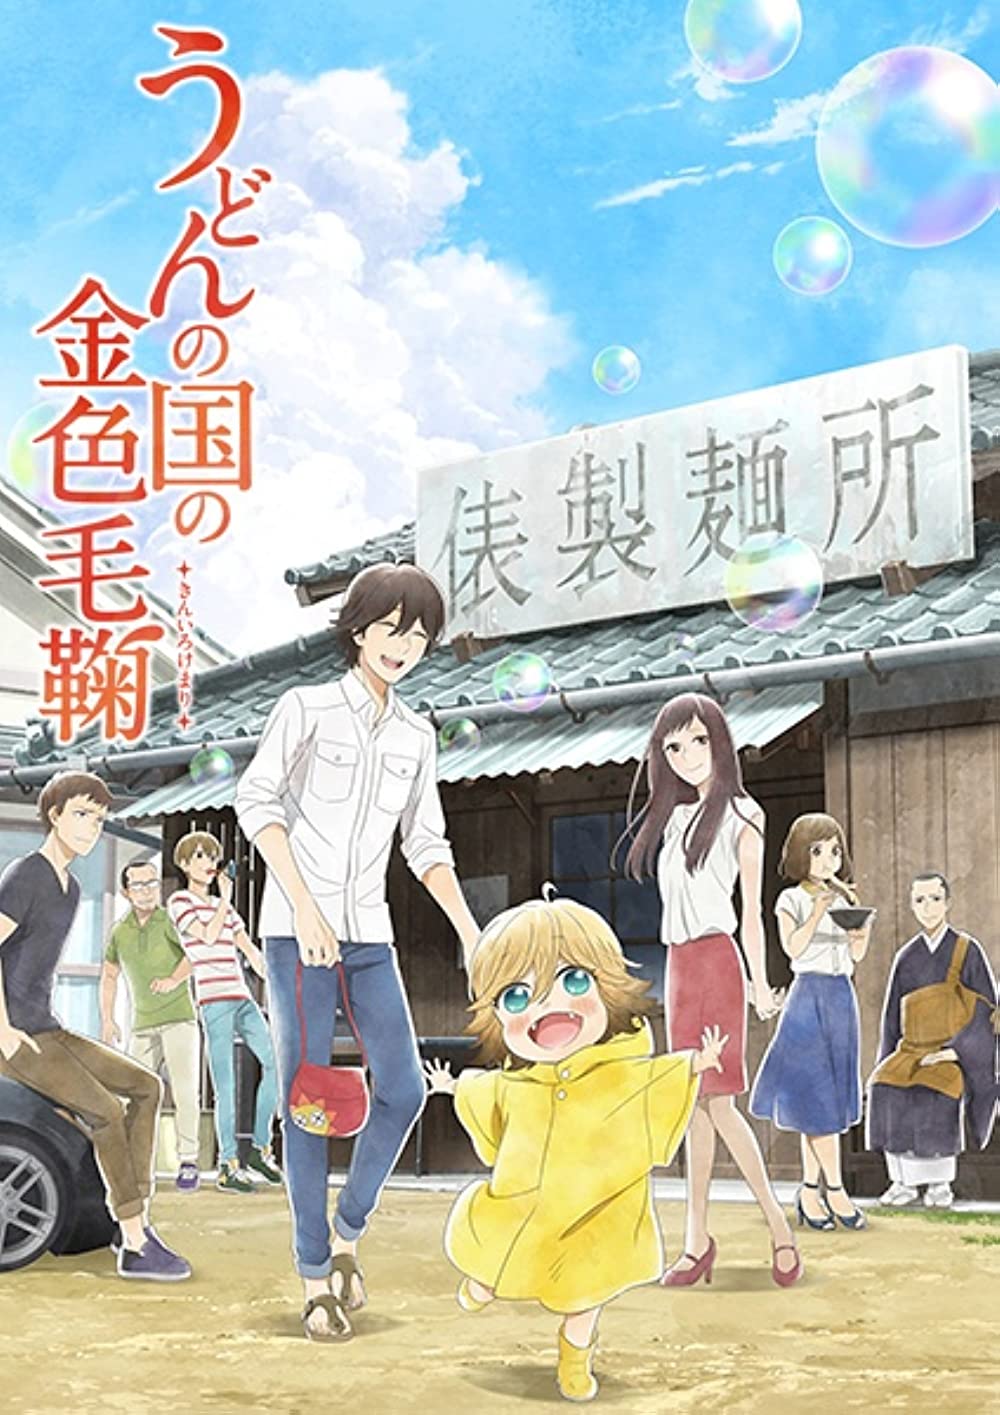 5 Rekomendasi Serial Anime Keluarga yang Mengharukan, Wajib untuk Ditonton!  - Ihwal